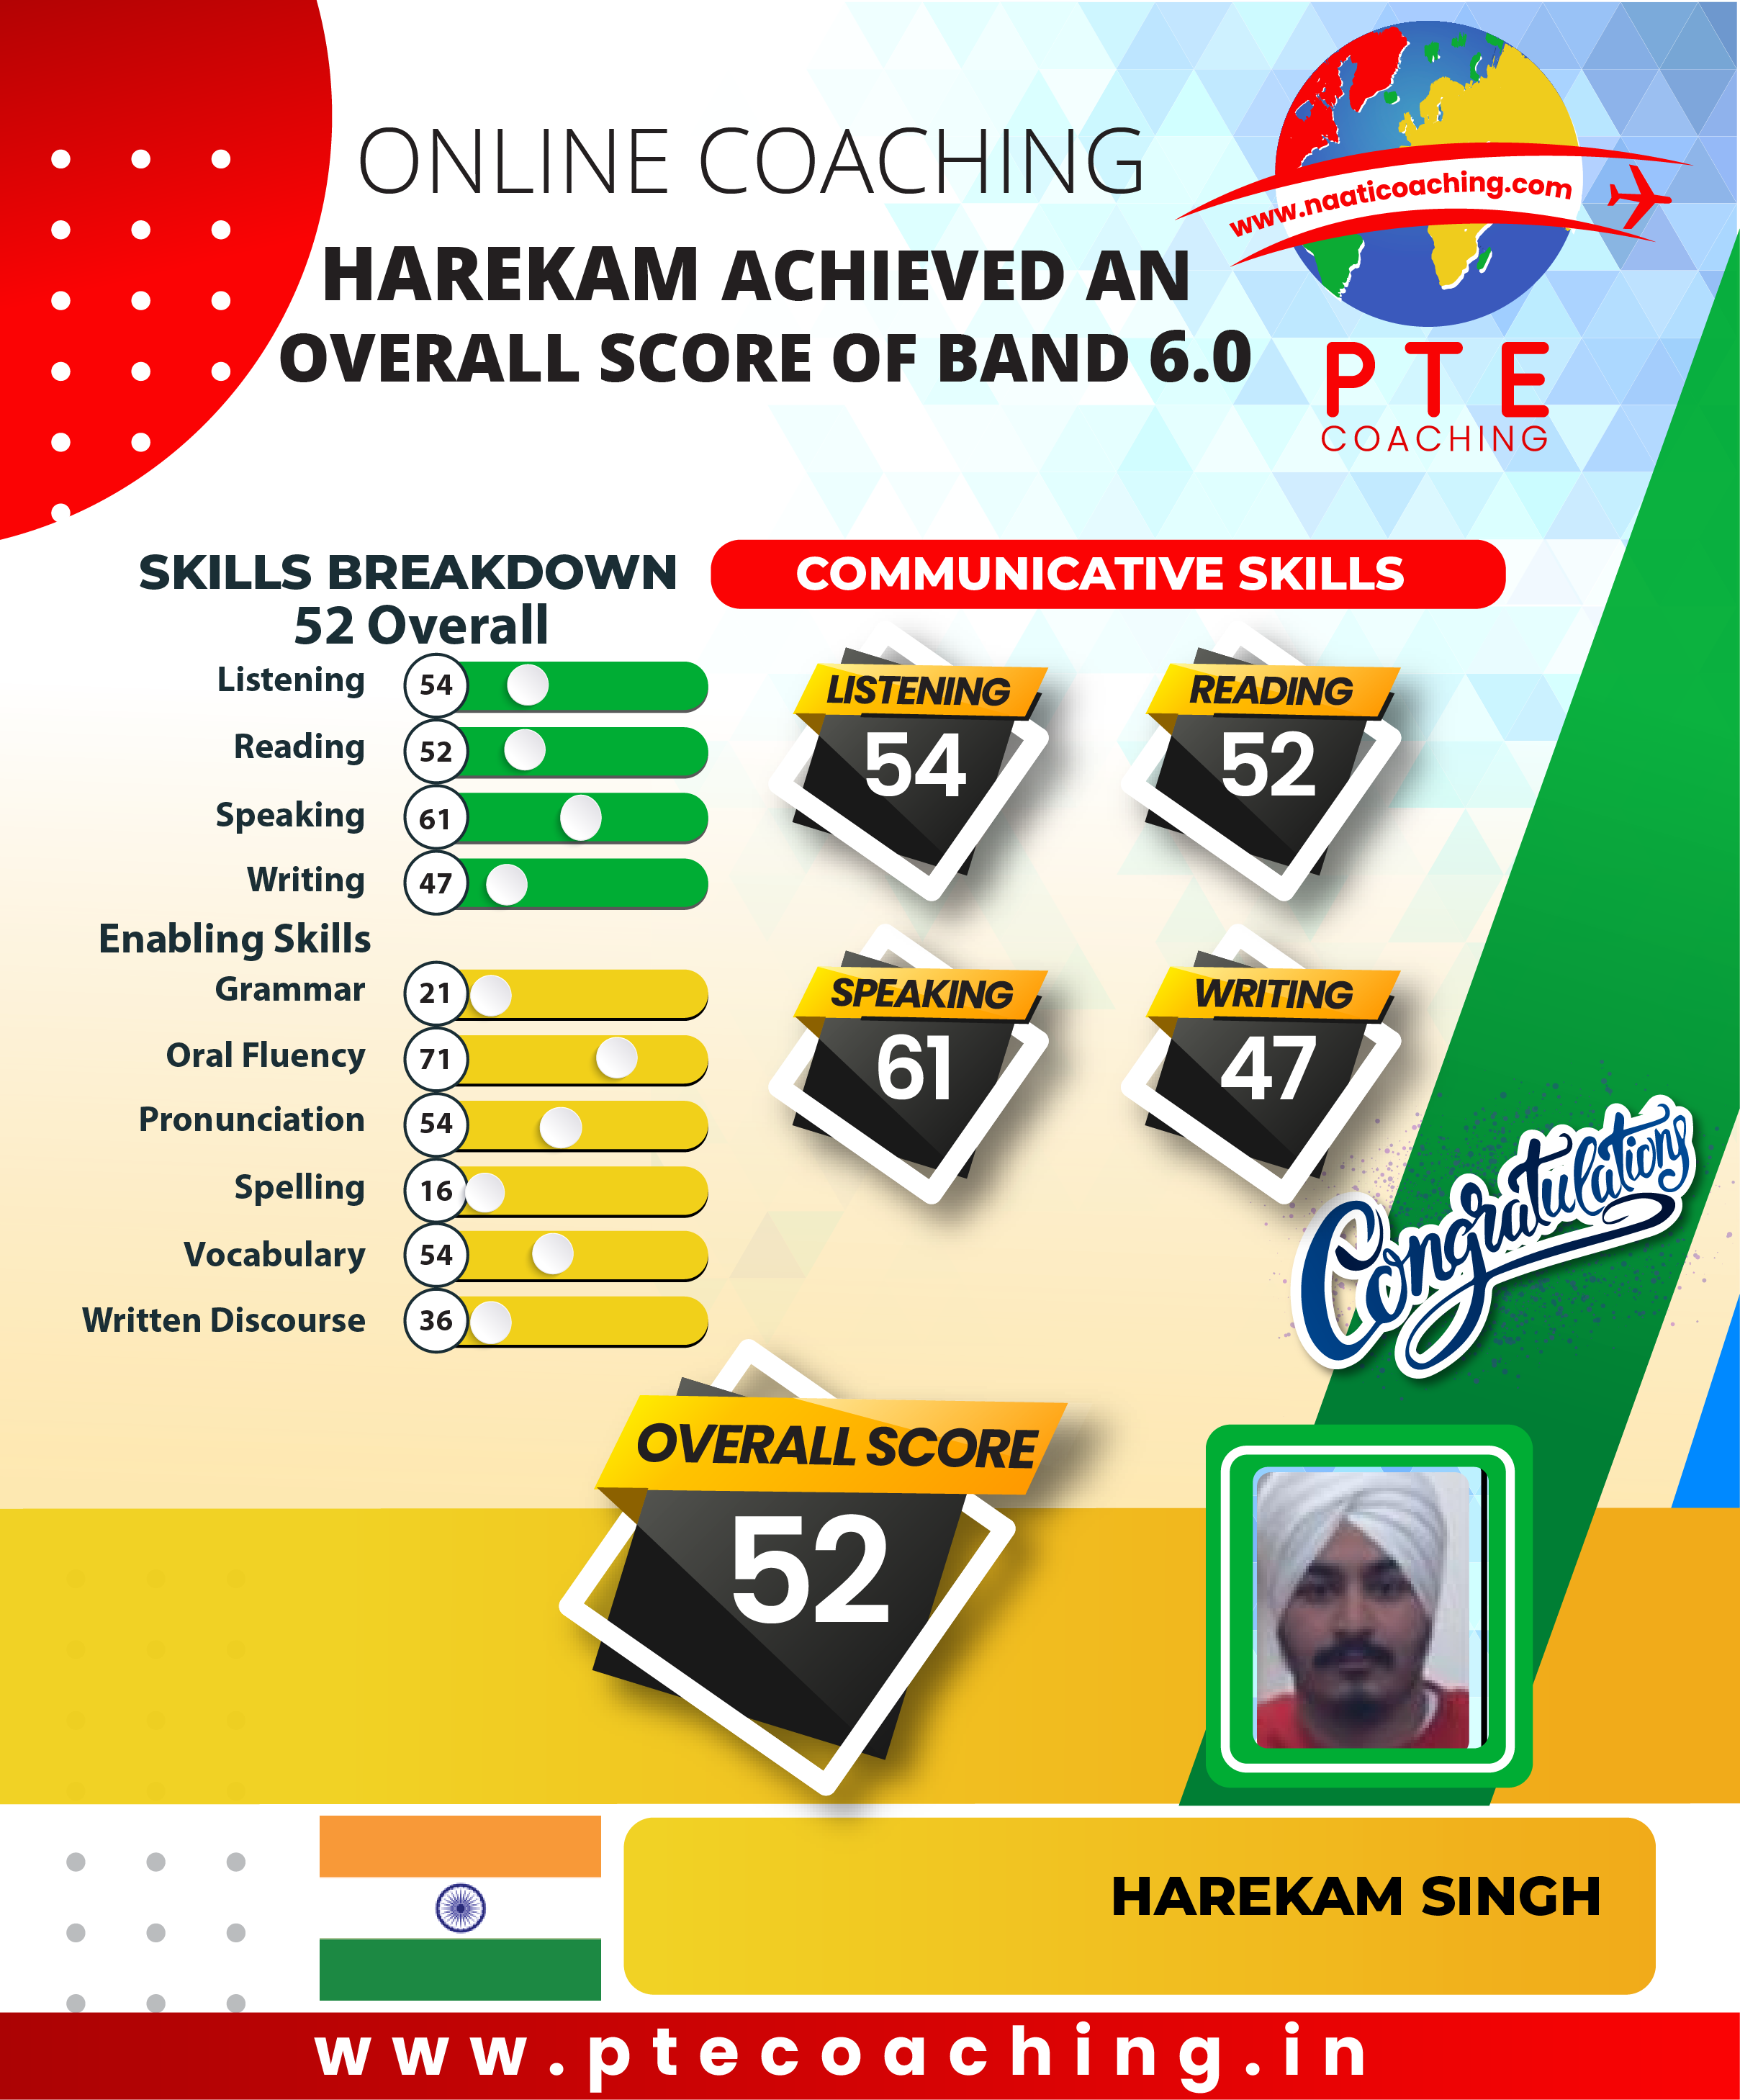 PTE Coaching Scorecard - Harekam achieved an overall score of band 6.0